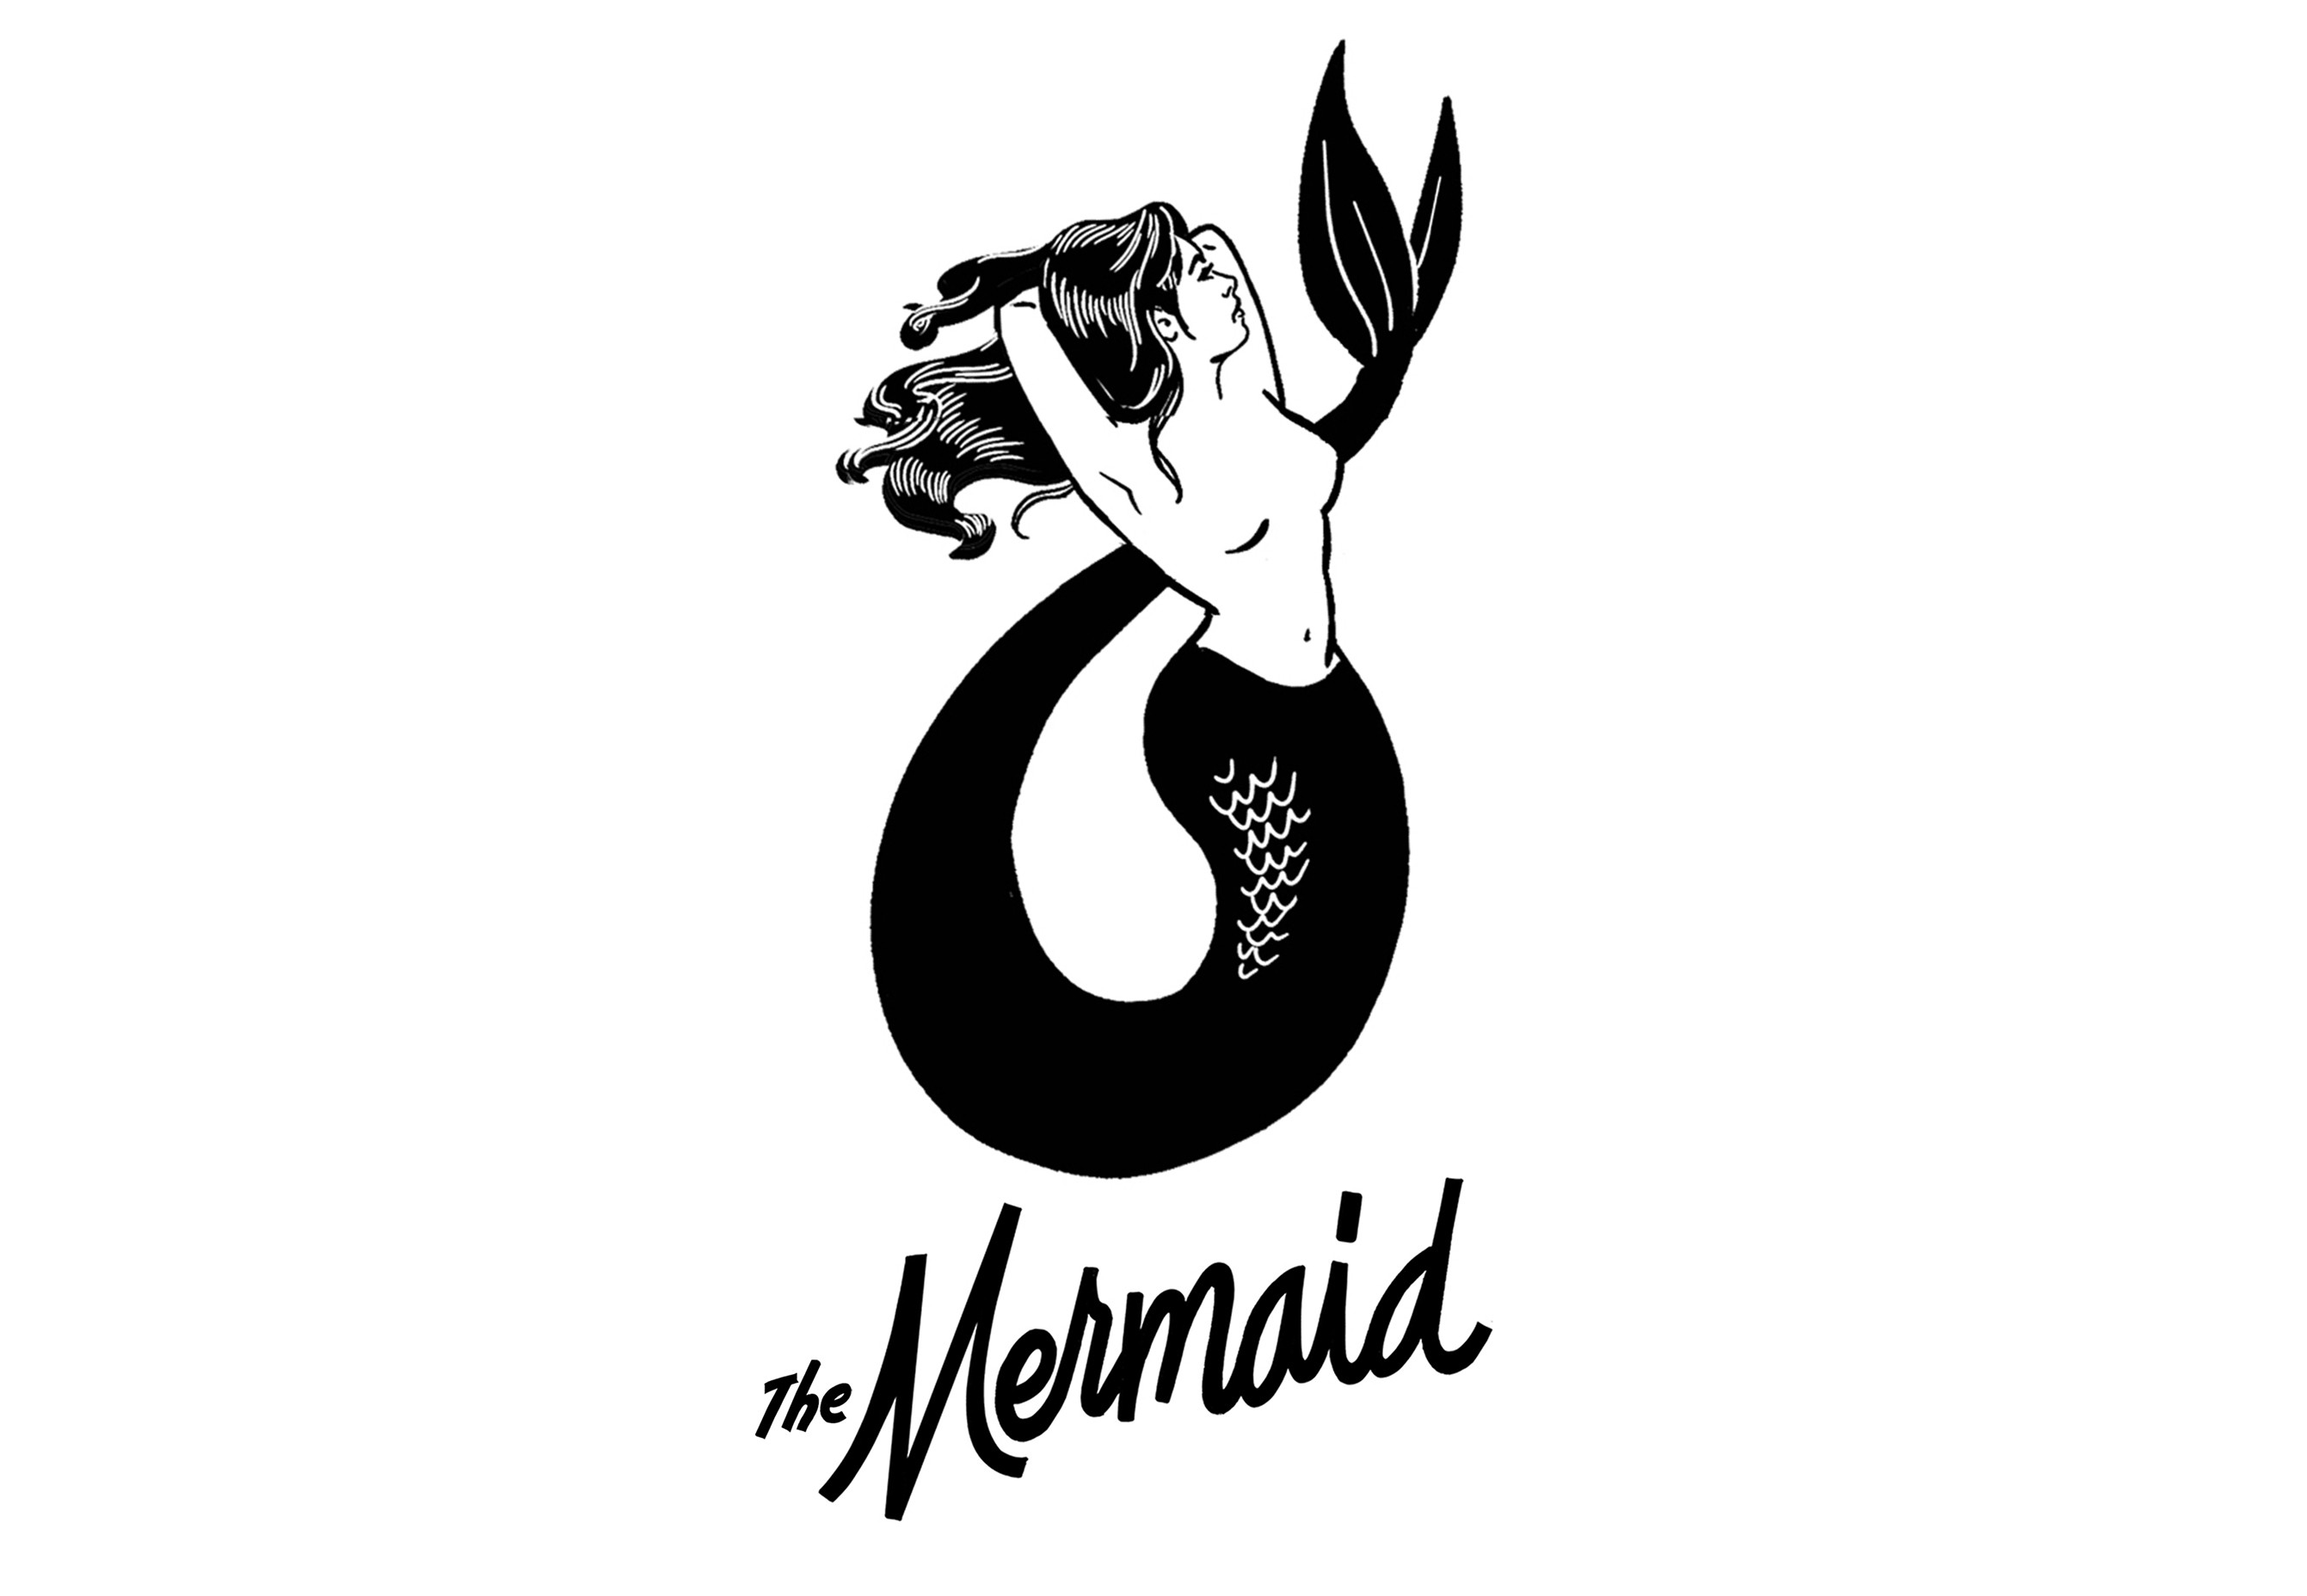 The Mermaid Bar